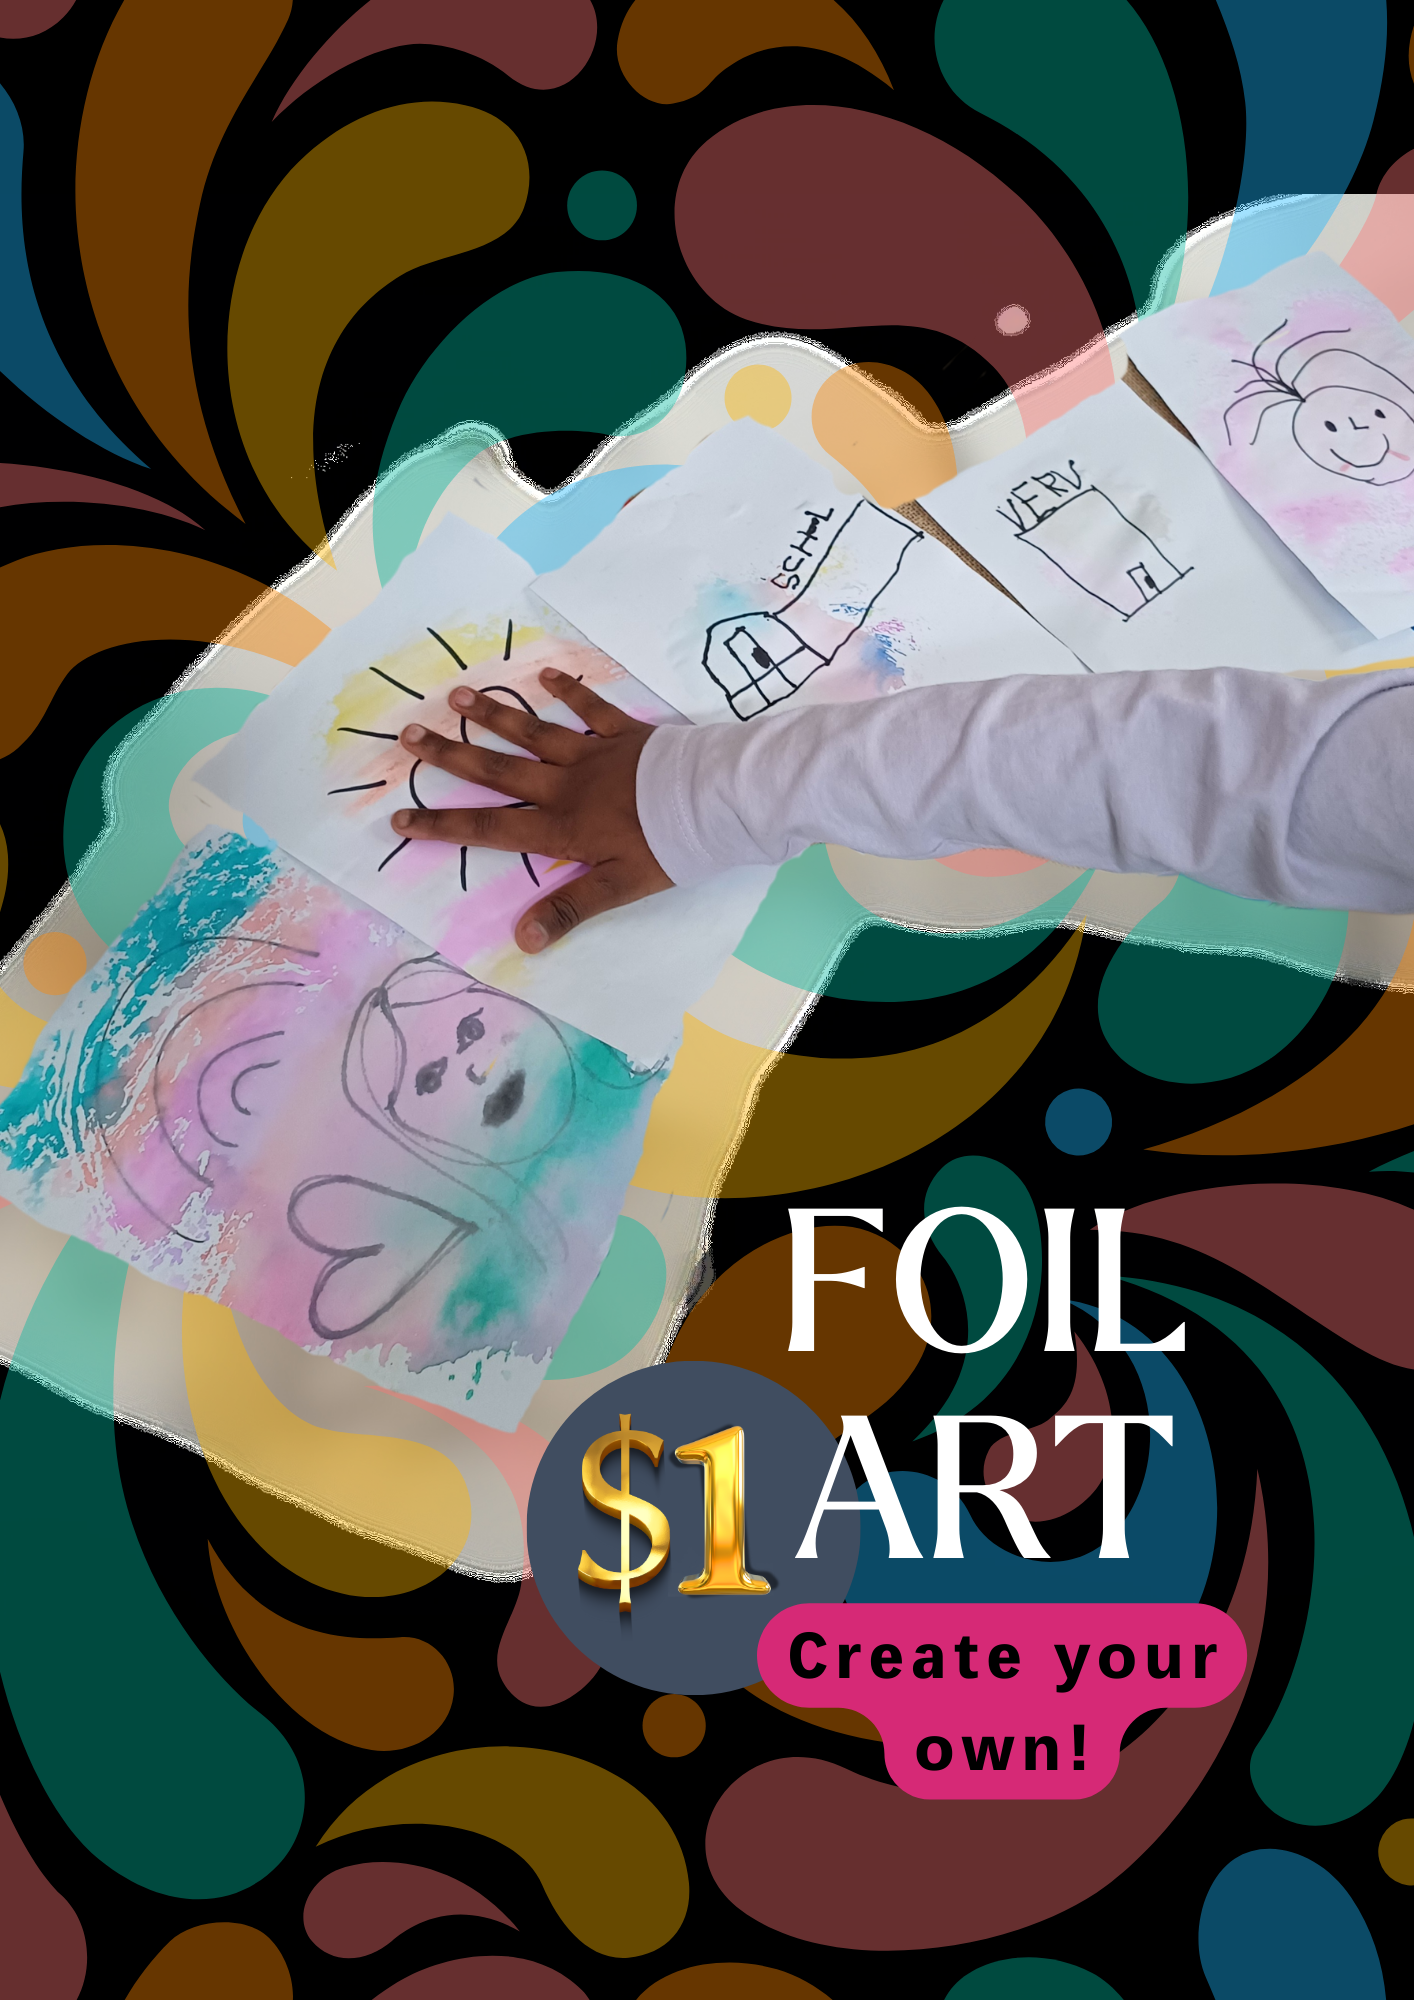 Create your own foil art!